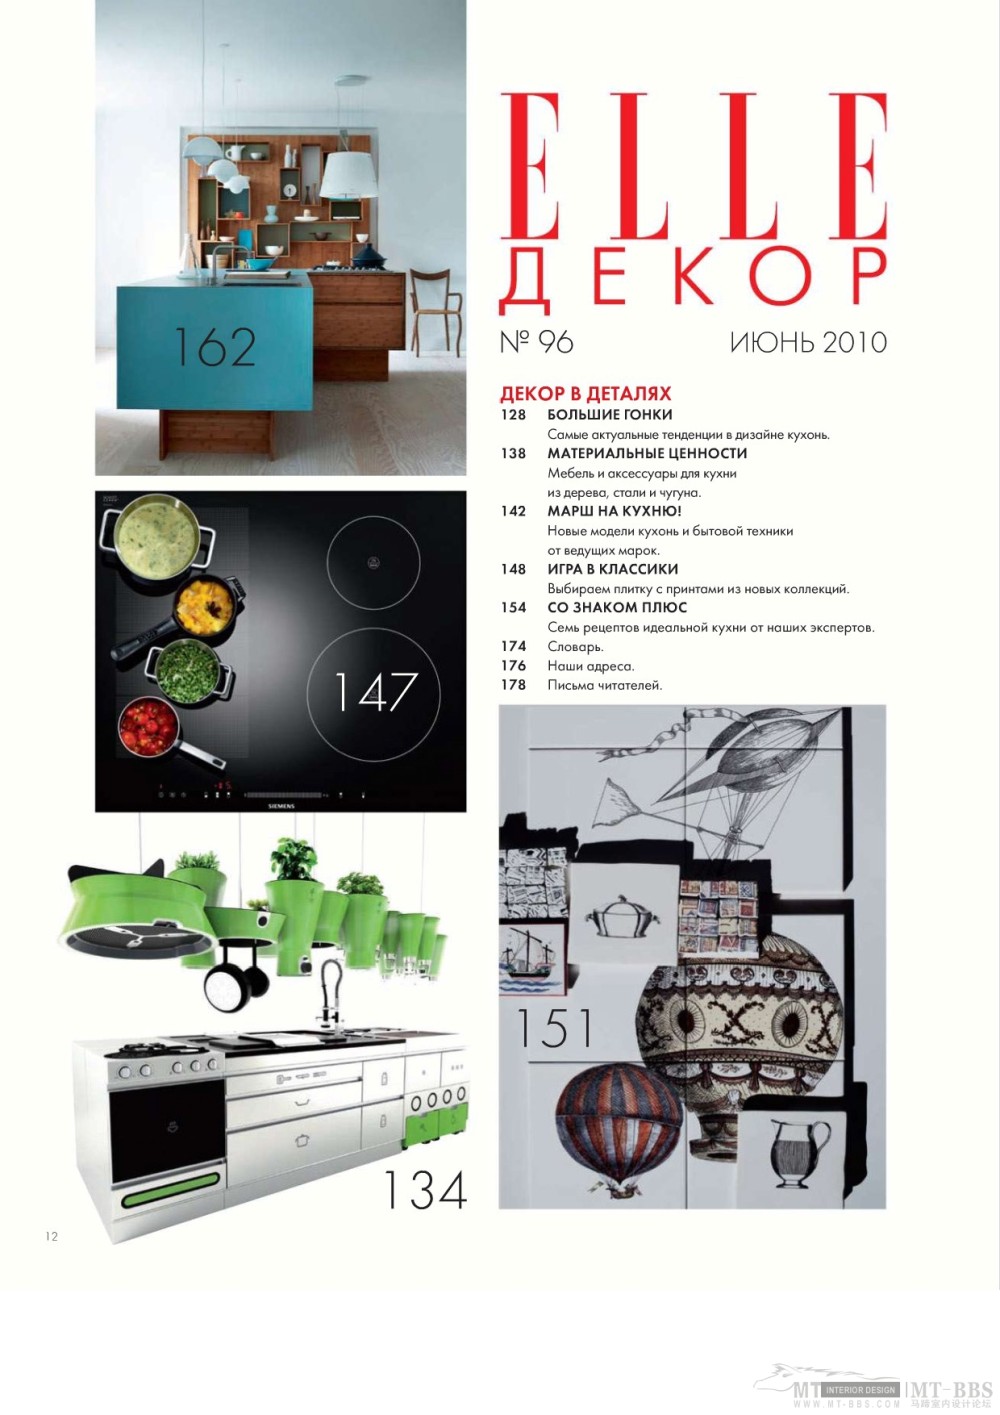 《ELLE DEKOP》 2010-06(国外室内设计杂志)_Elle_decor 06 2010MT-BBS-004.jpg